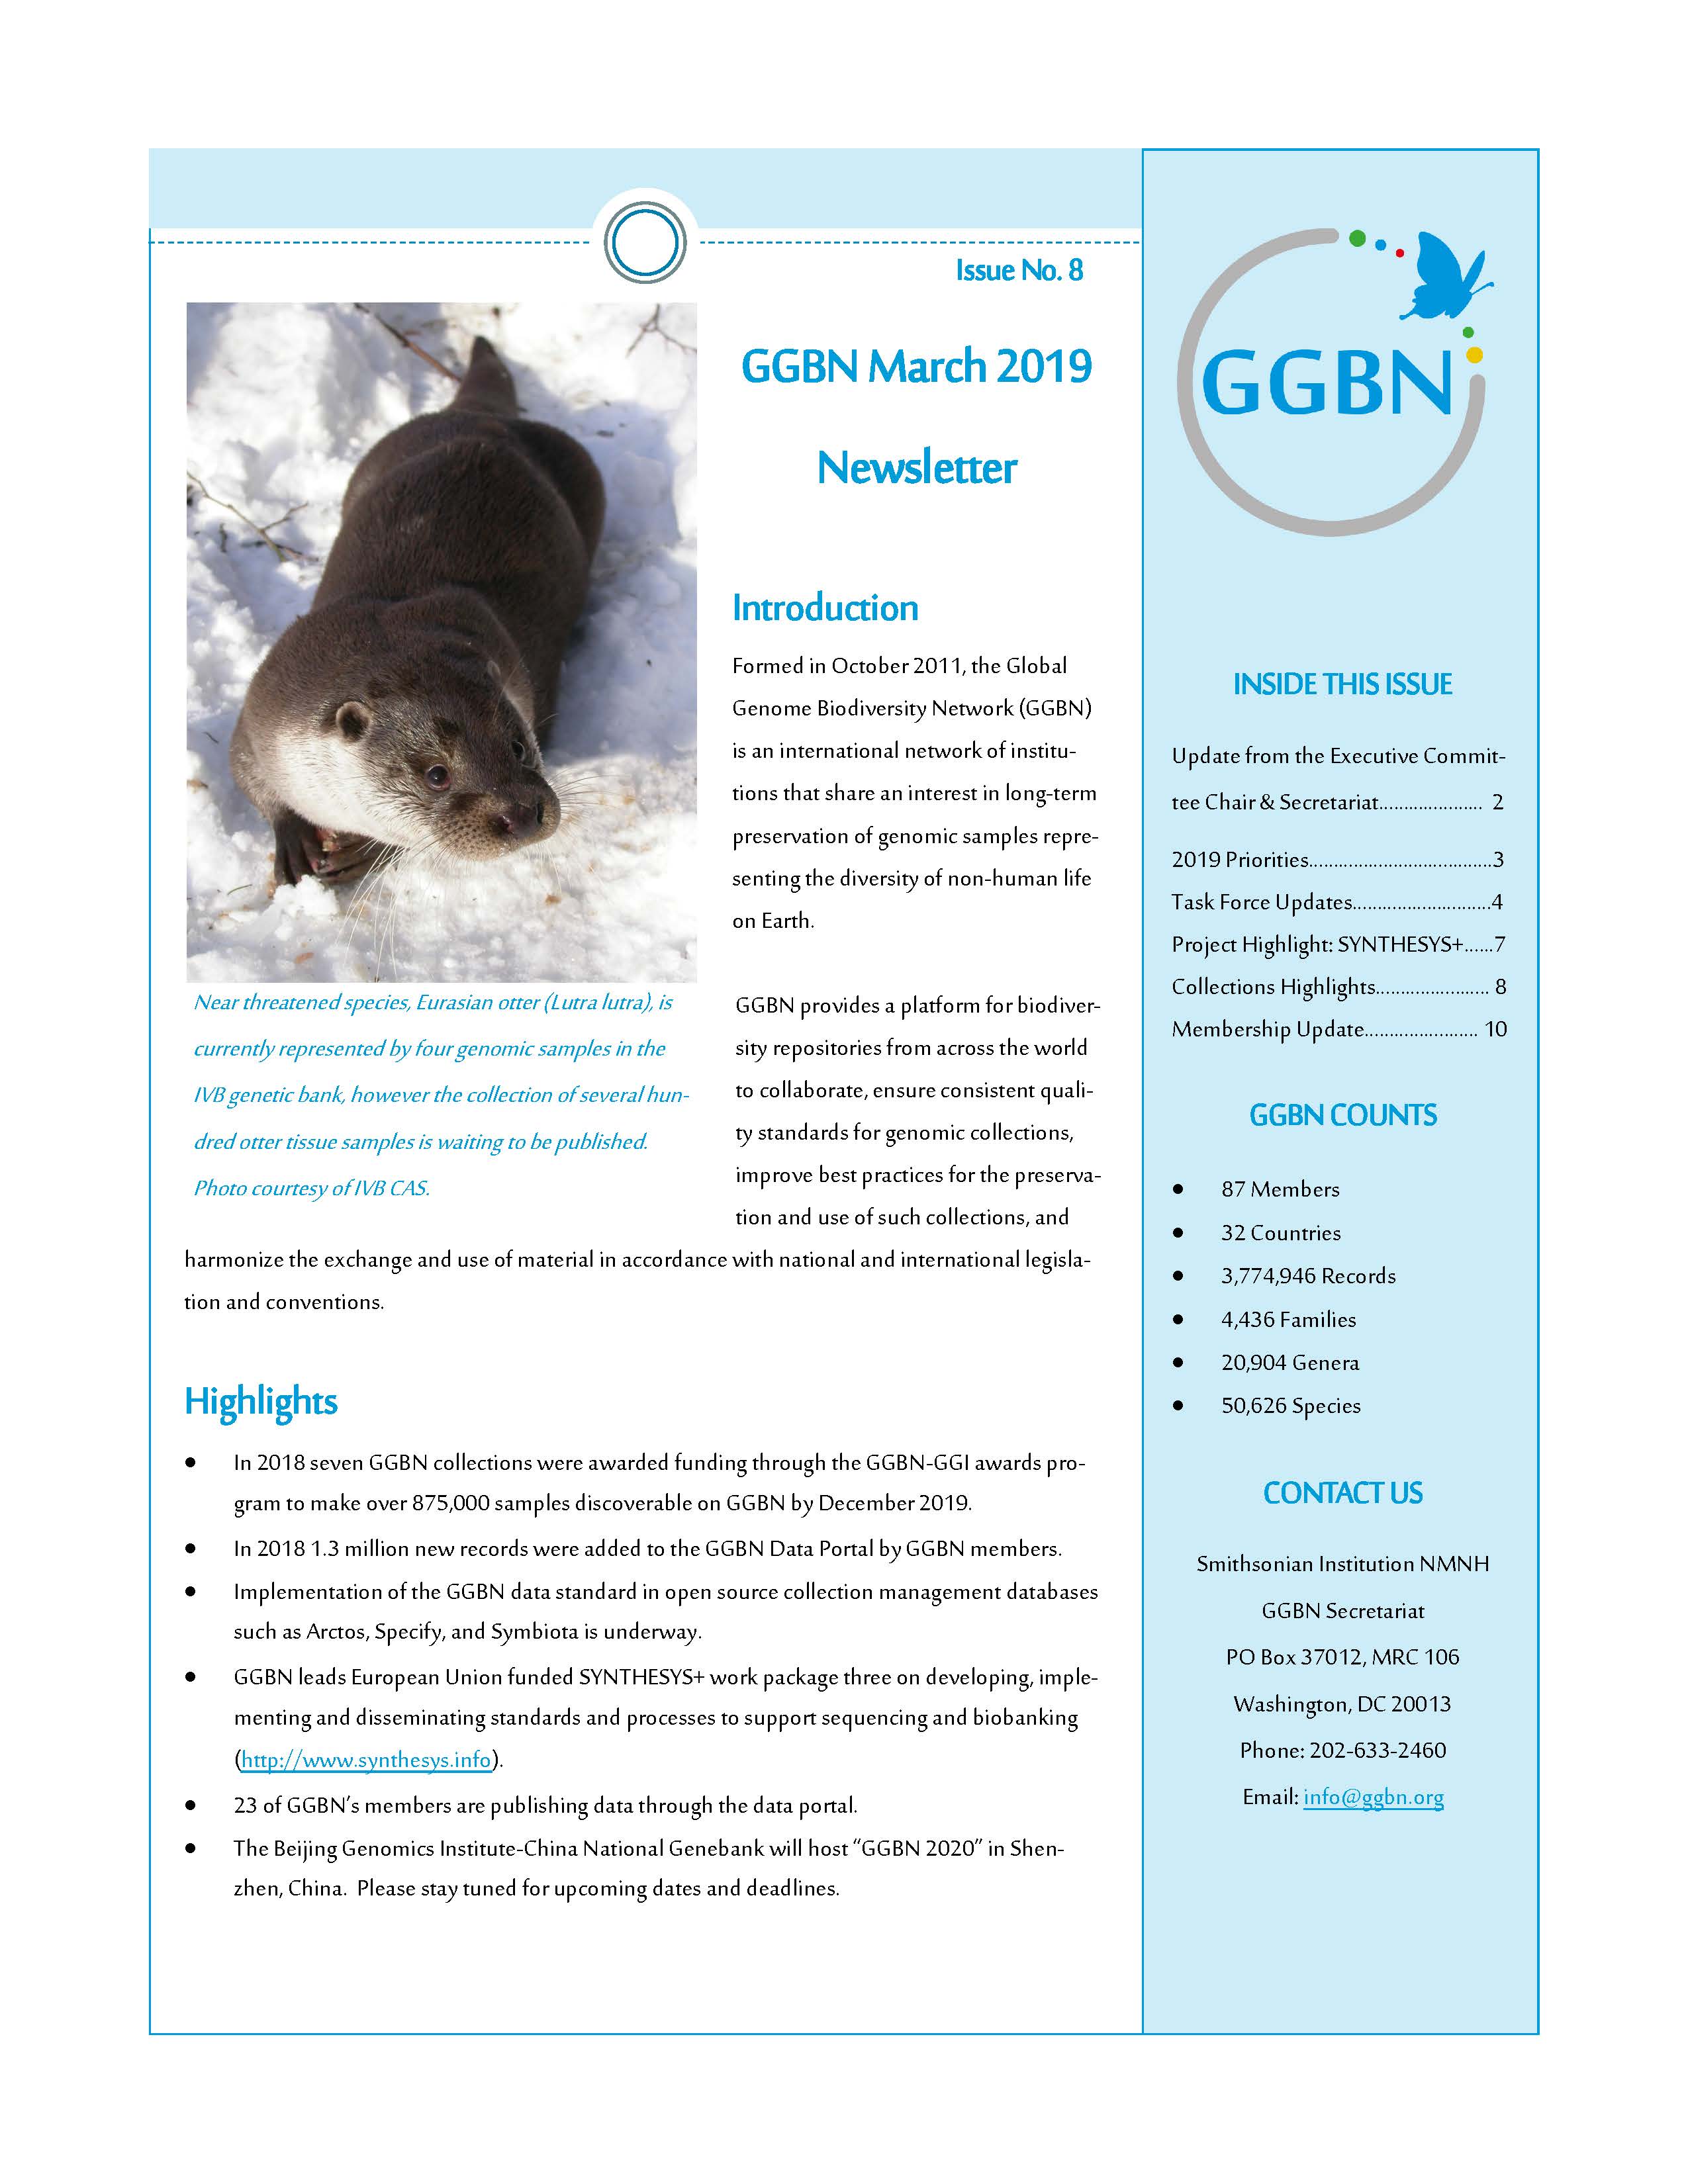 GGBN2019Newsletter.jpg